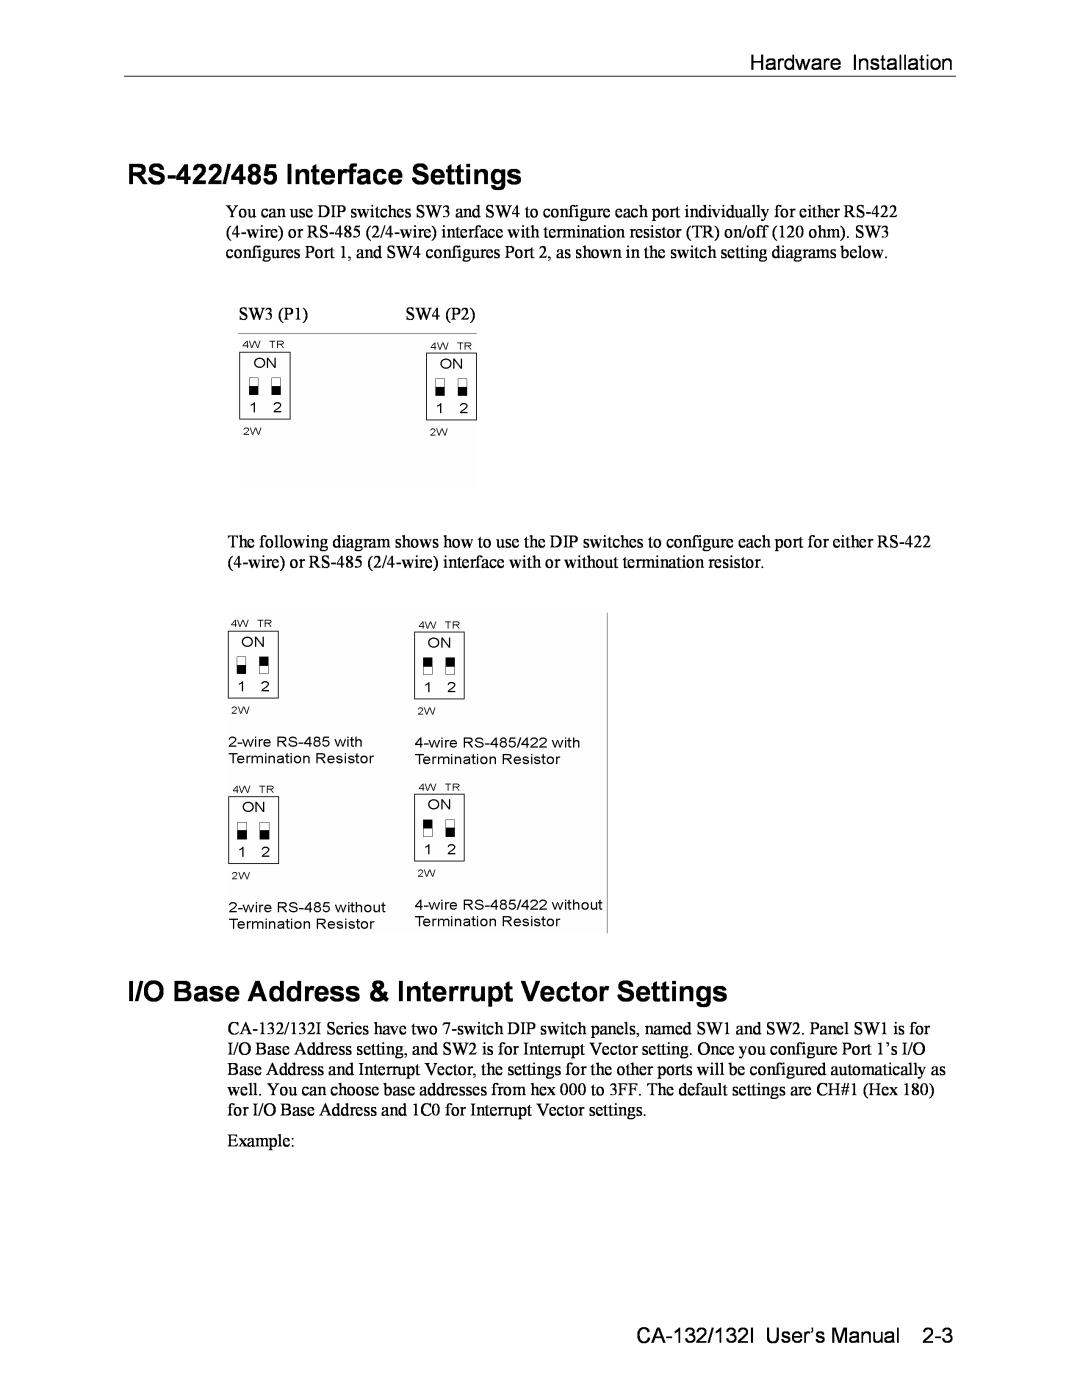 Moxa Technologies CA-132/132I user manual RS-422/485 Interface Settings, I/O Base Address & Interrupt Vector Settings 